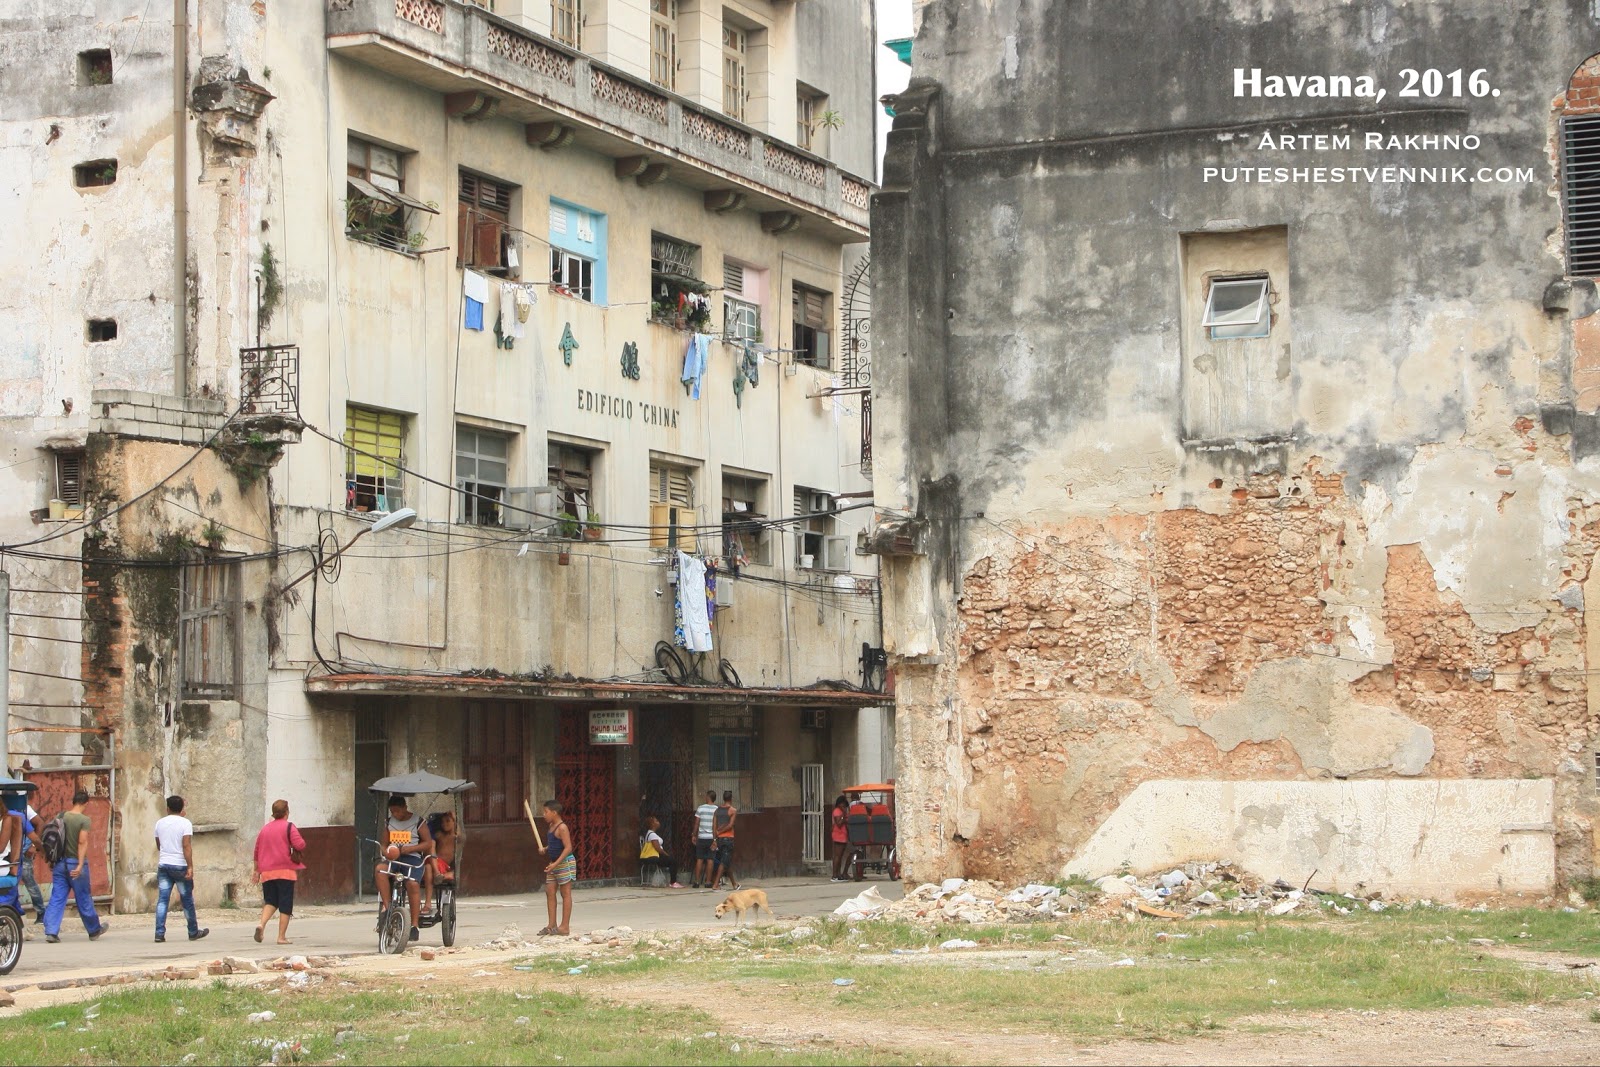 Китайский квартал в Гаване